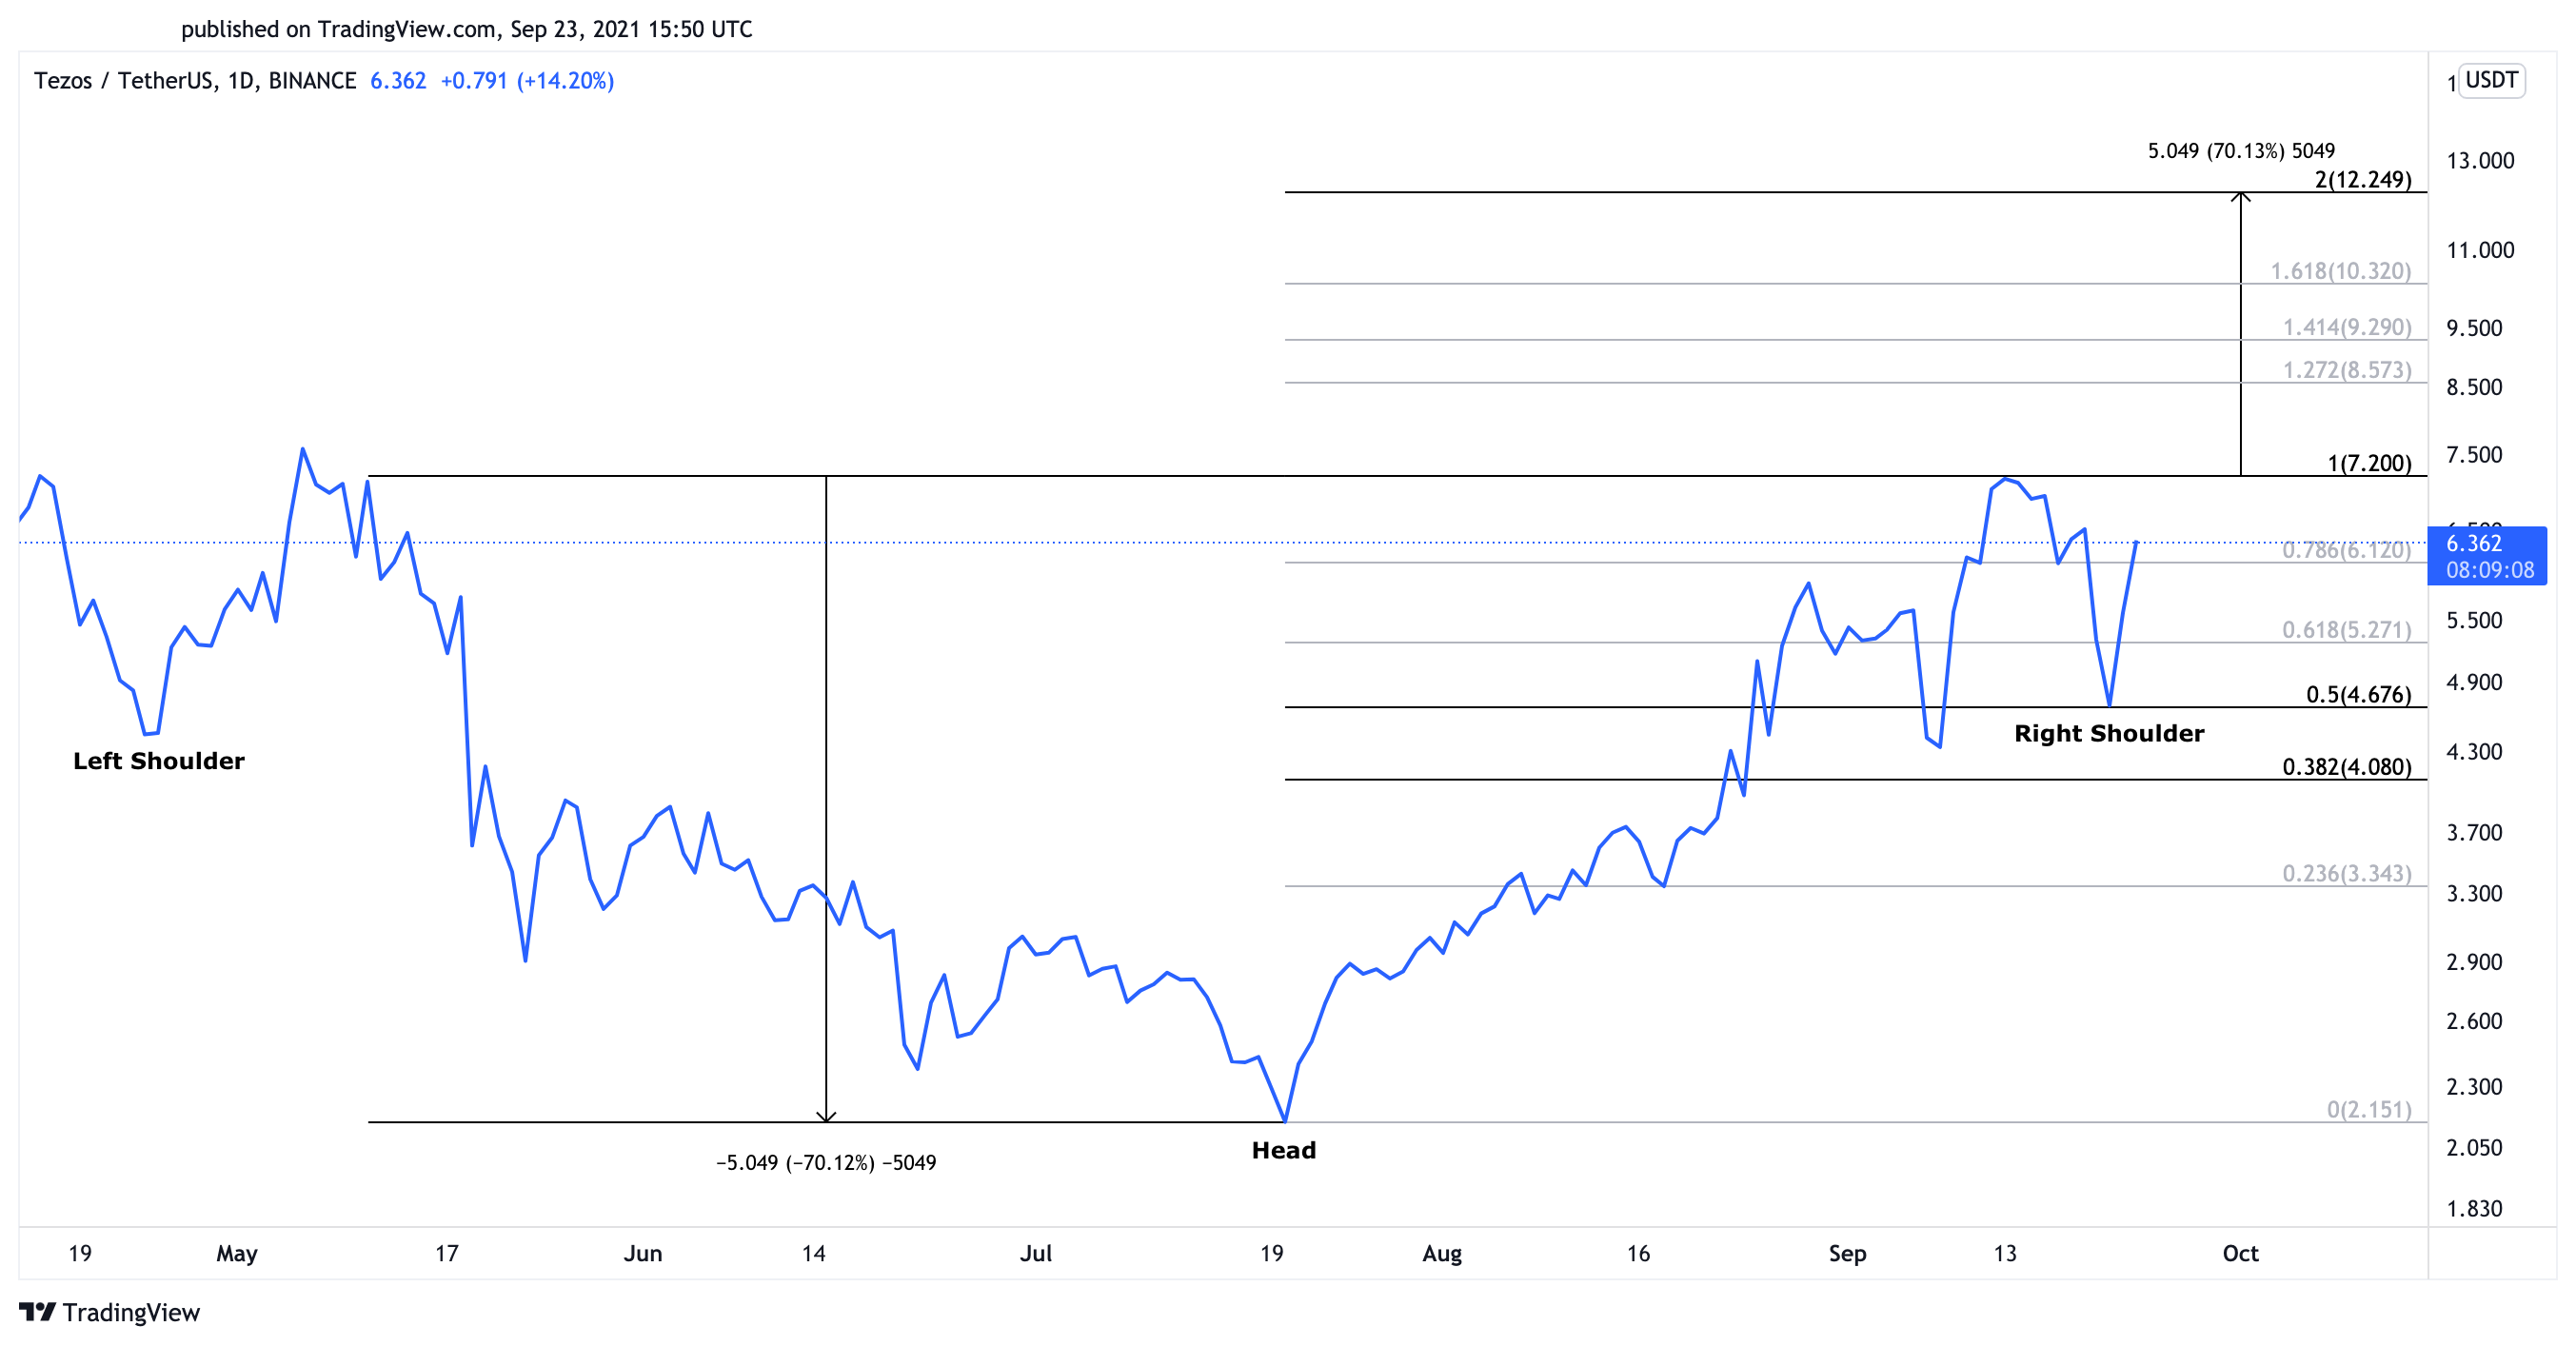 Tezos US dollar price chart